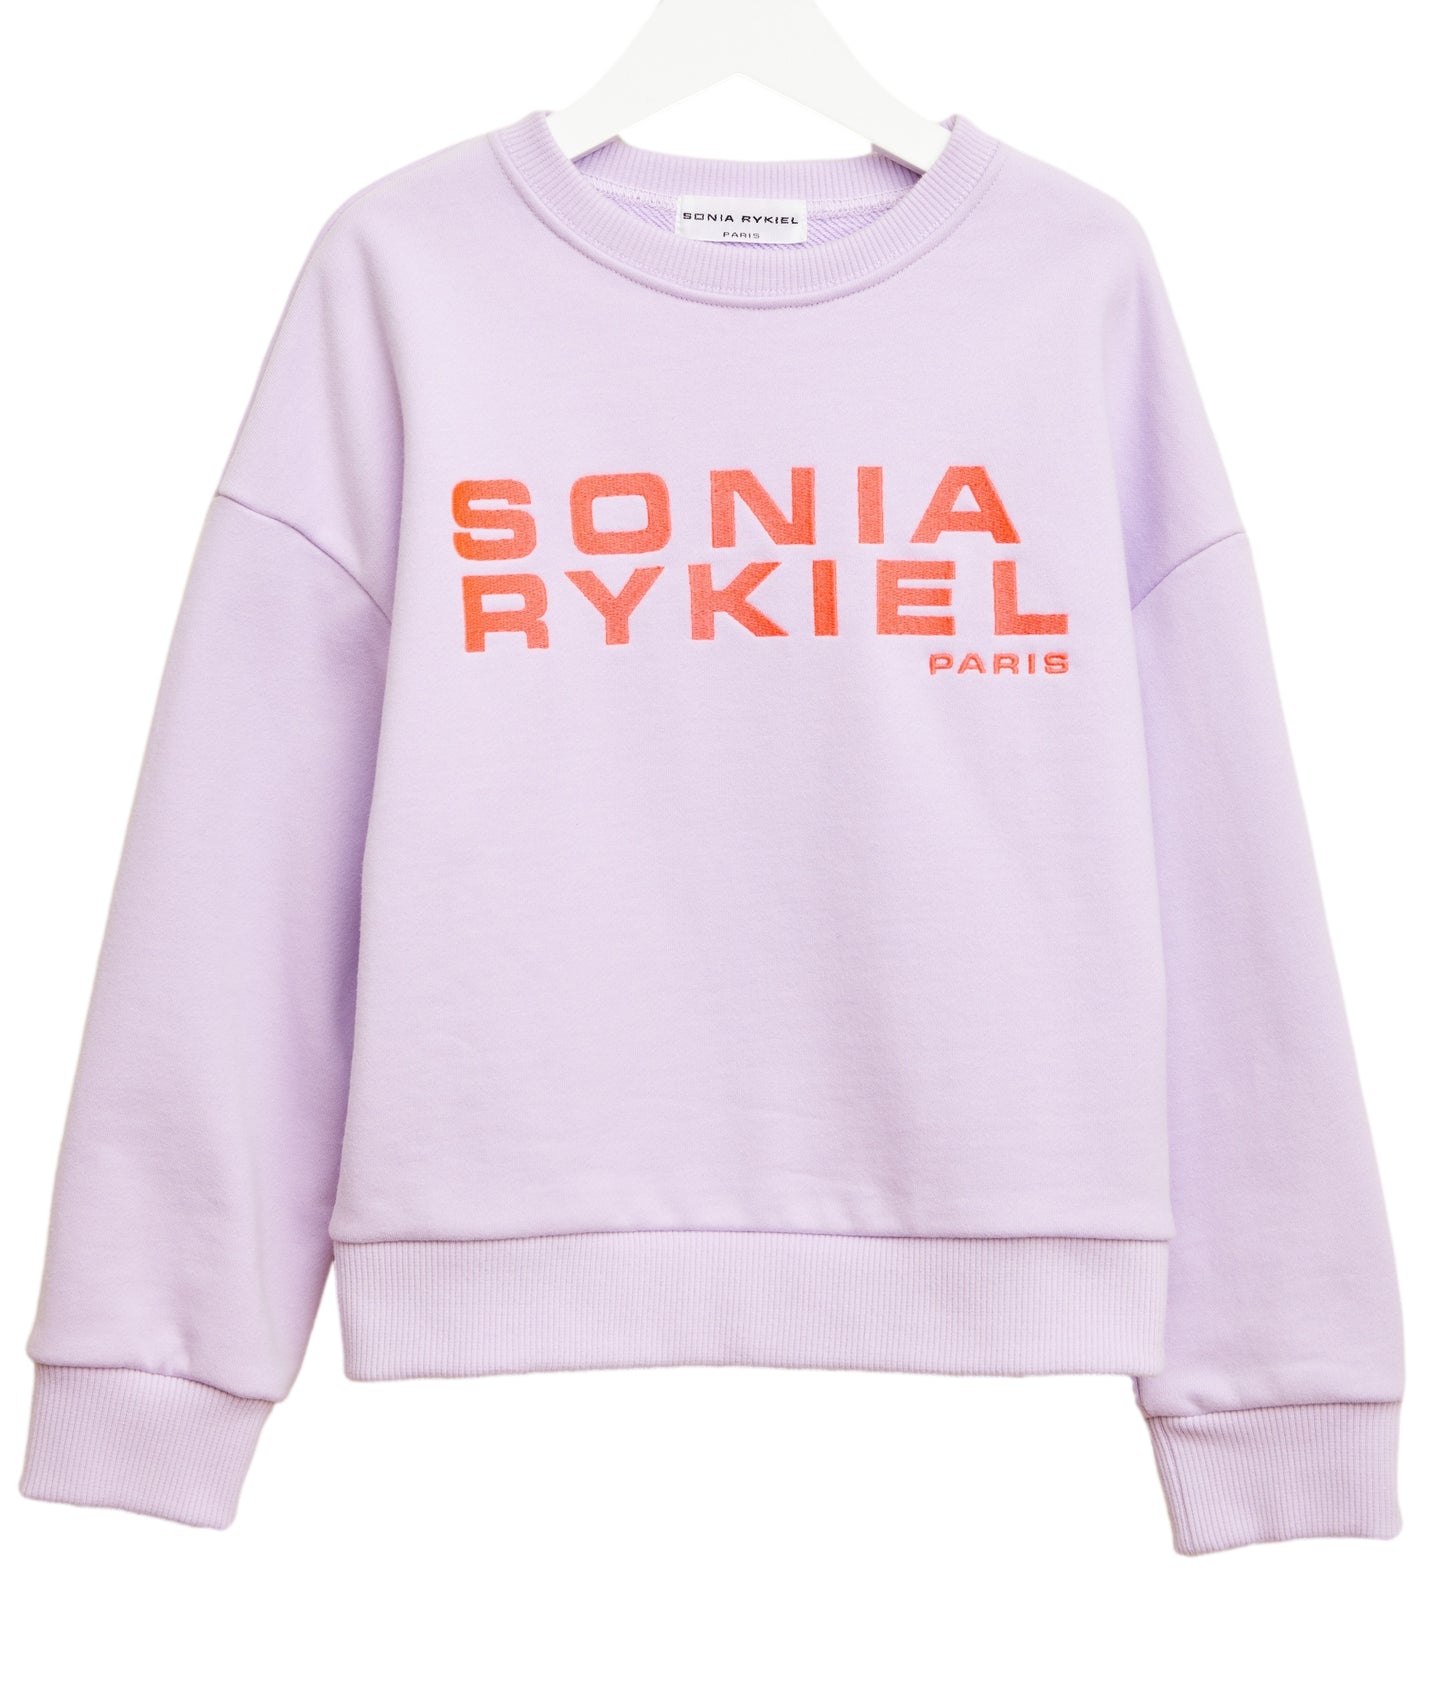 Sonia Rykiel Marion Graphic Sweatshirt